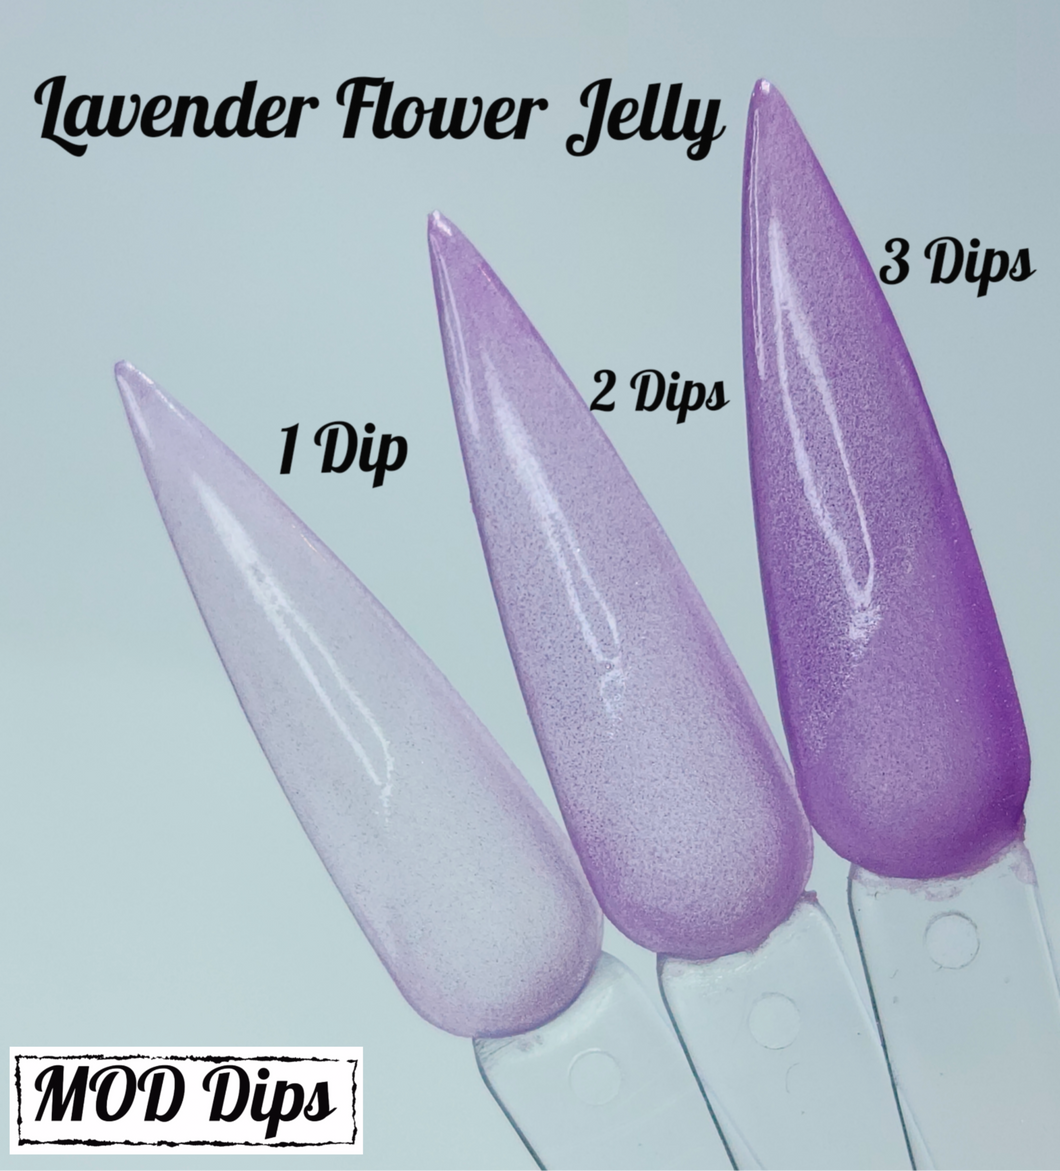 Lavender Flower Jelly